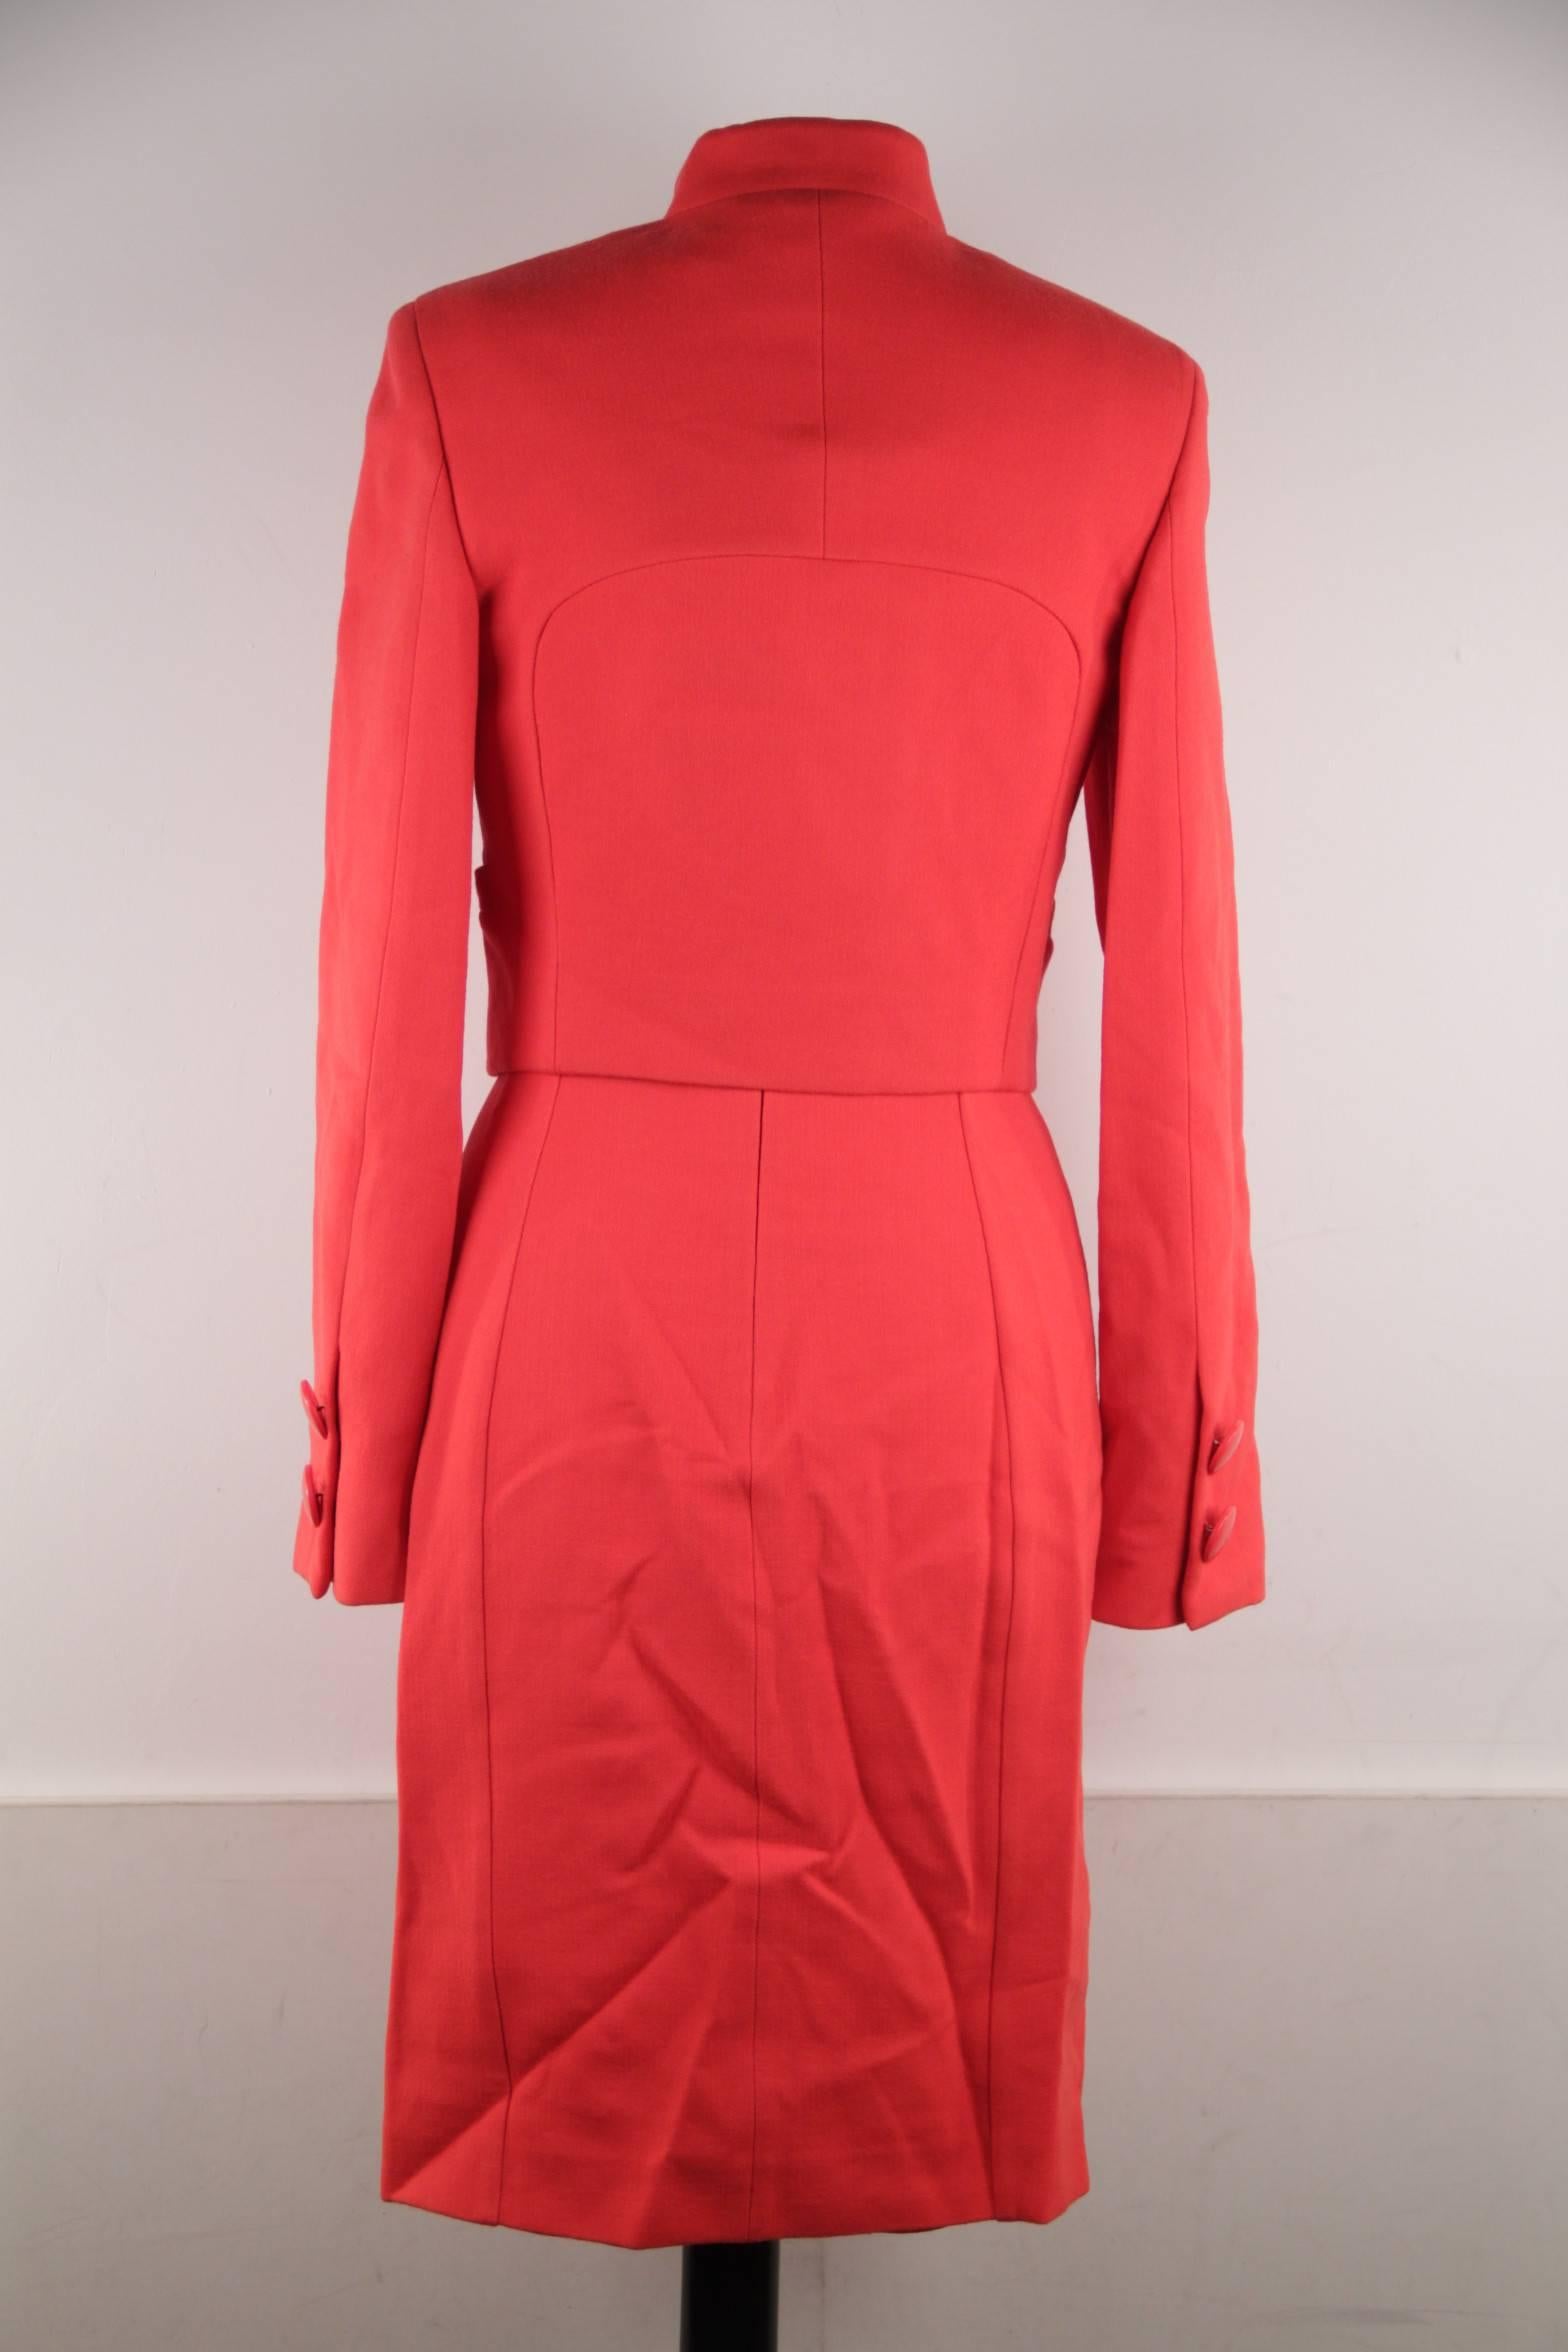 Women's VERSACE Red Wool & Silk DRESS & JACKET Set SUIT 2007 Fall Collection Sz 40 IT